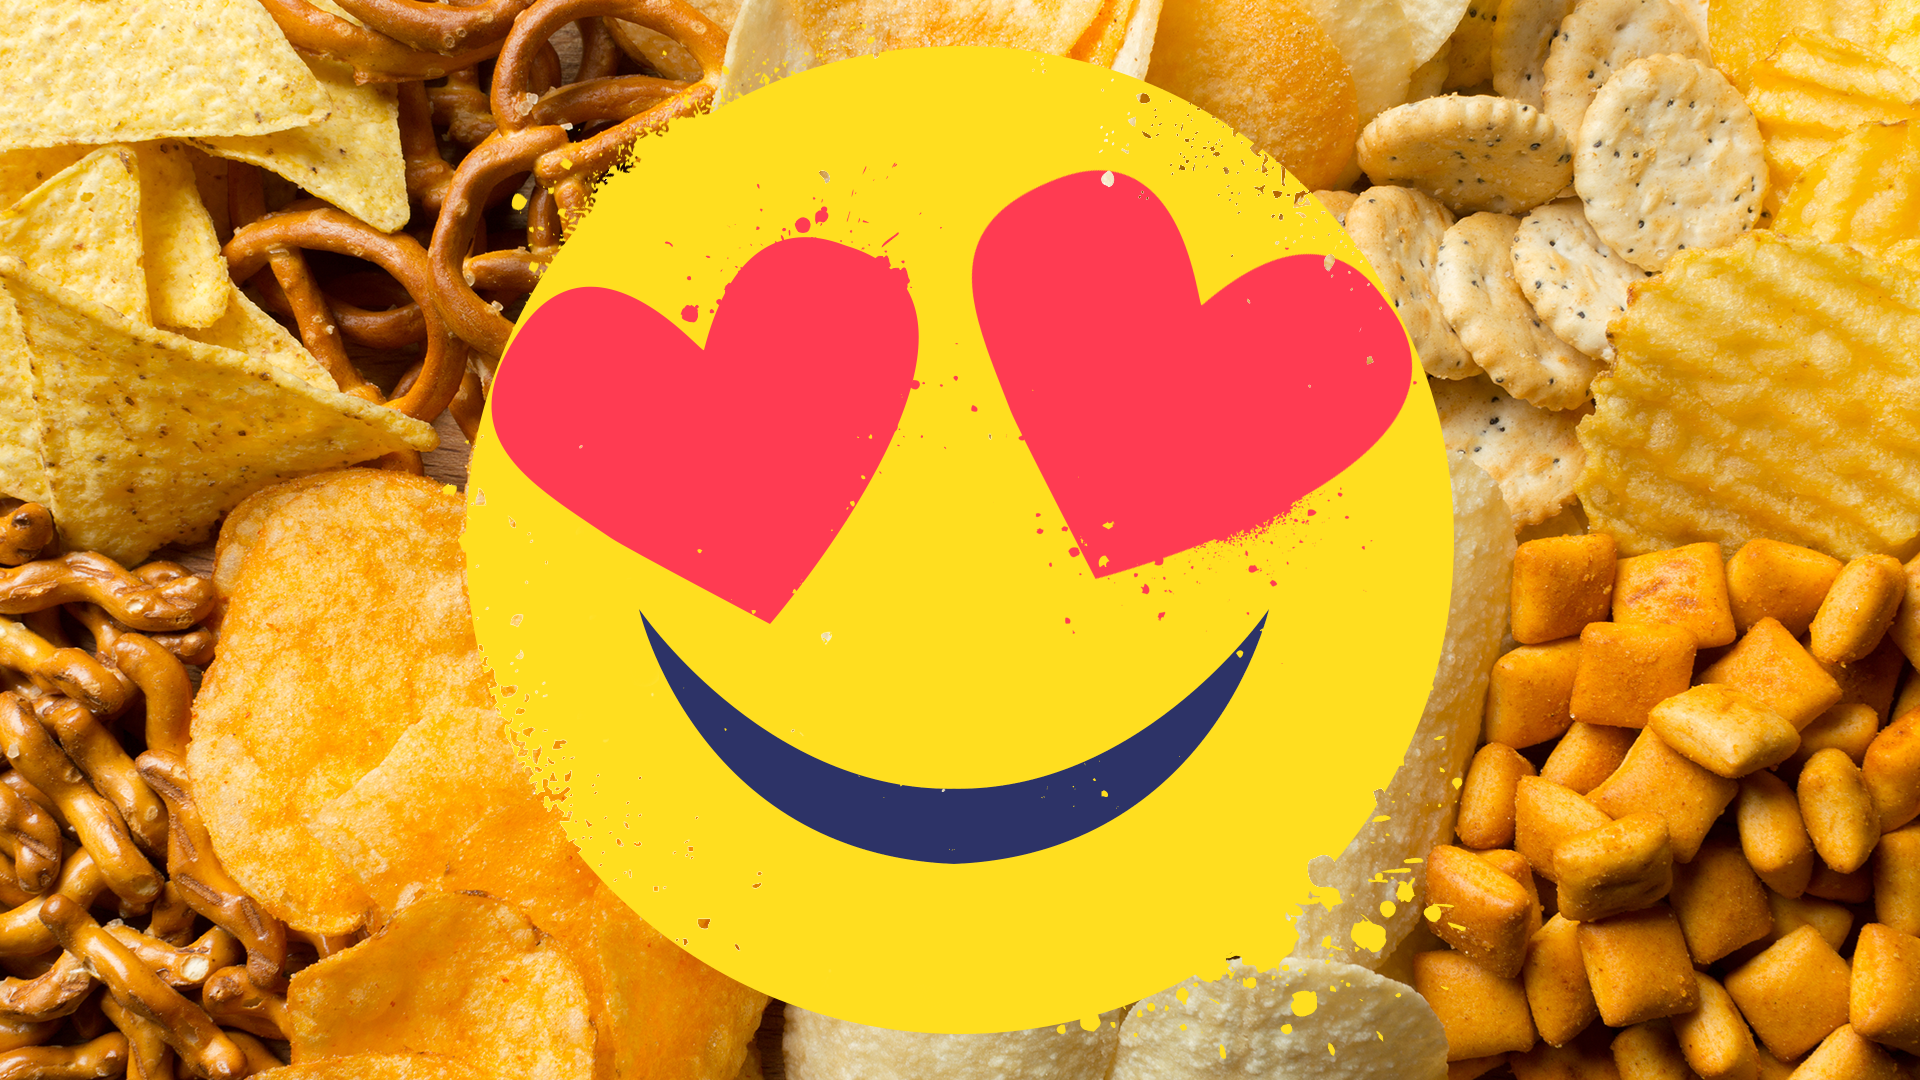 Snacks and heart eyes emoji